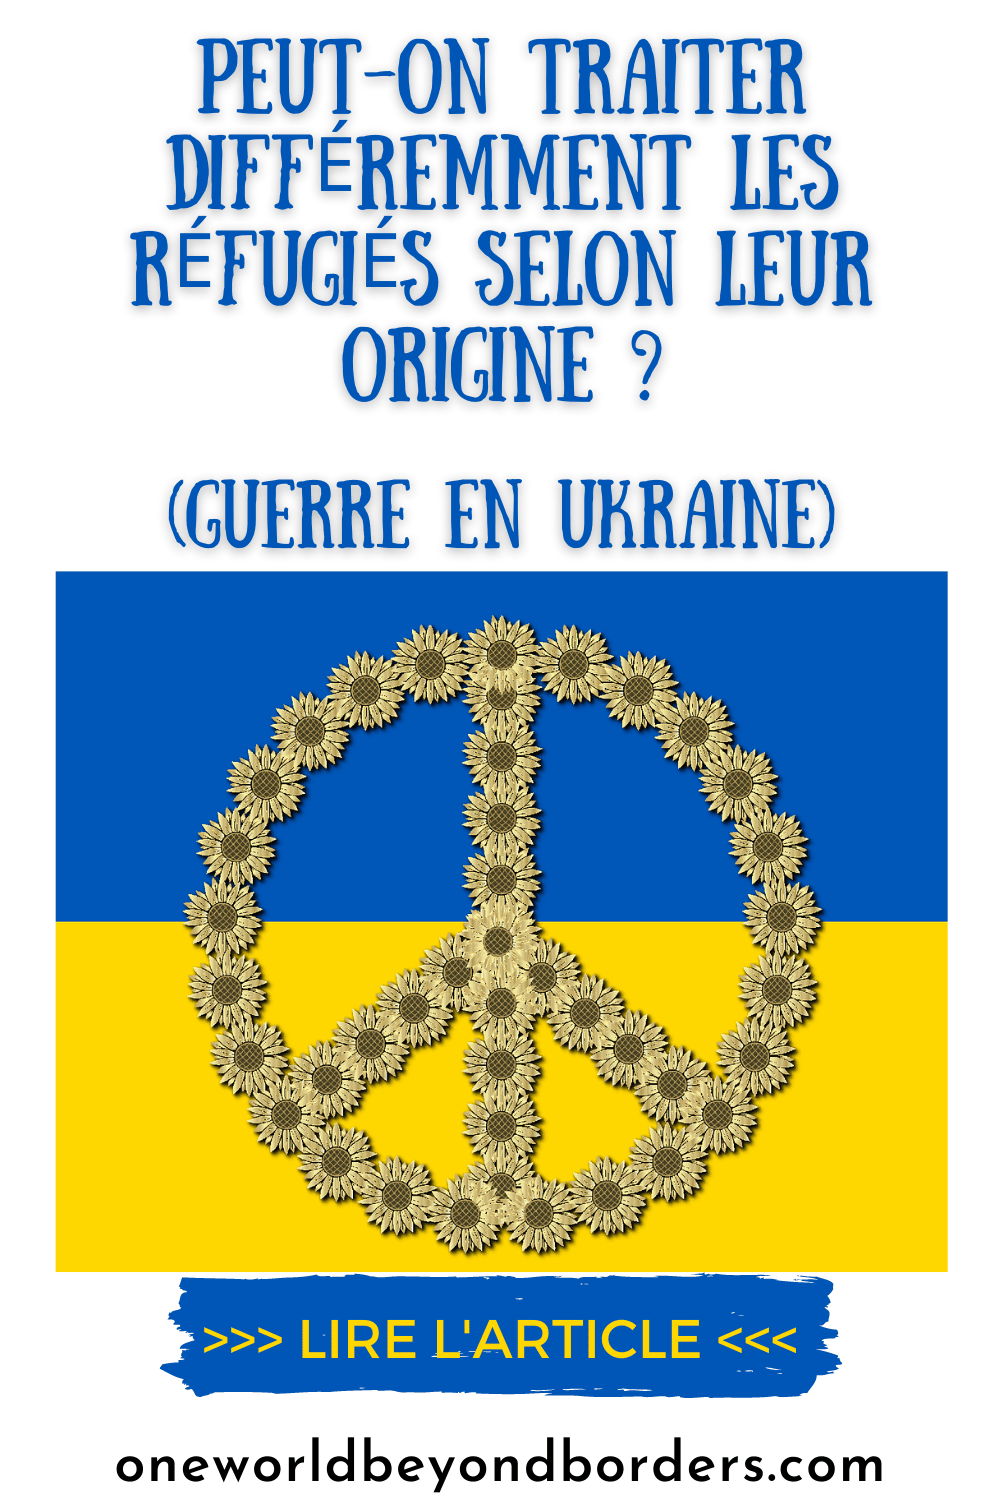 Discrimination réfugiés - guerre en Ukraine - Épingle Pinterest